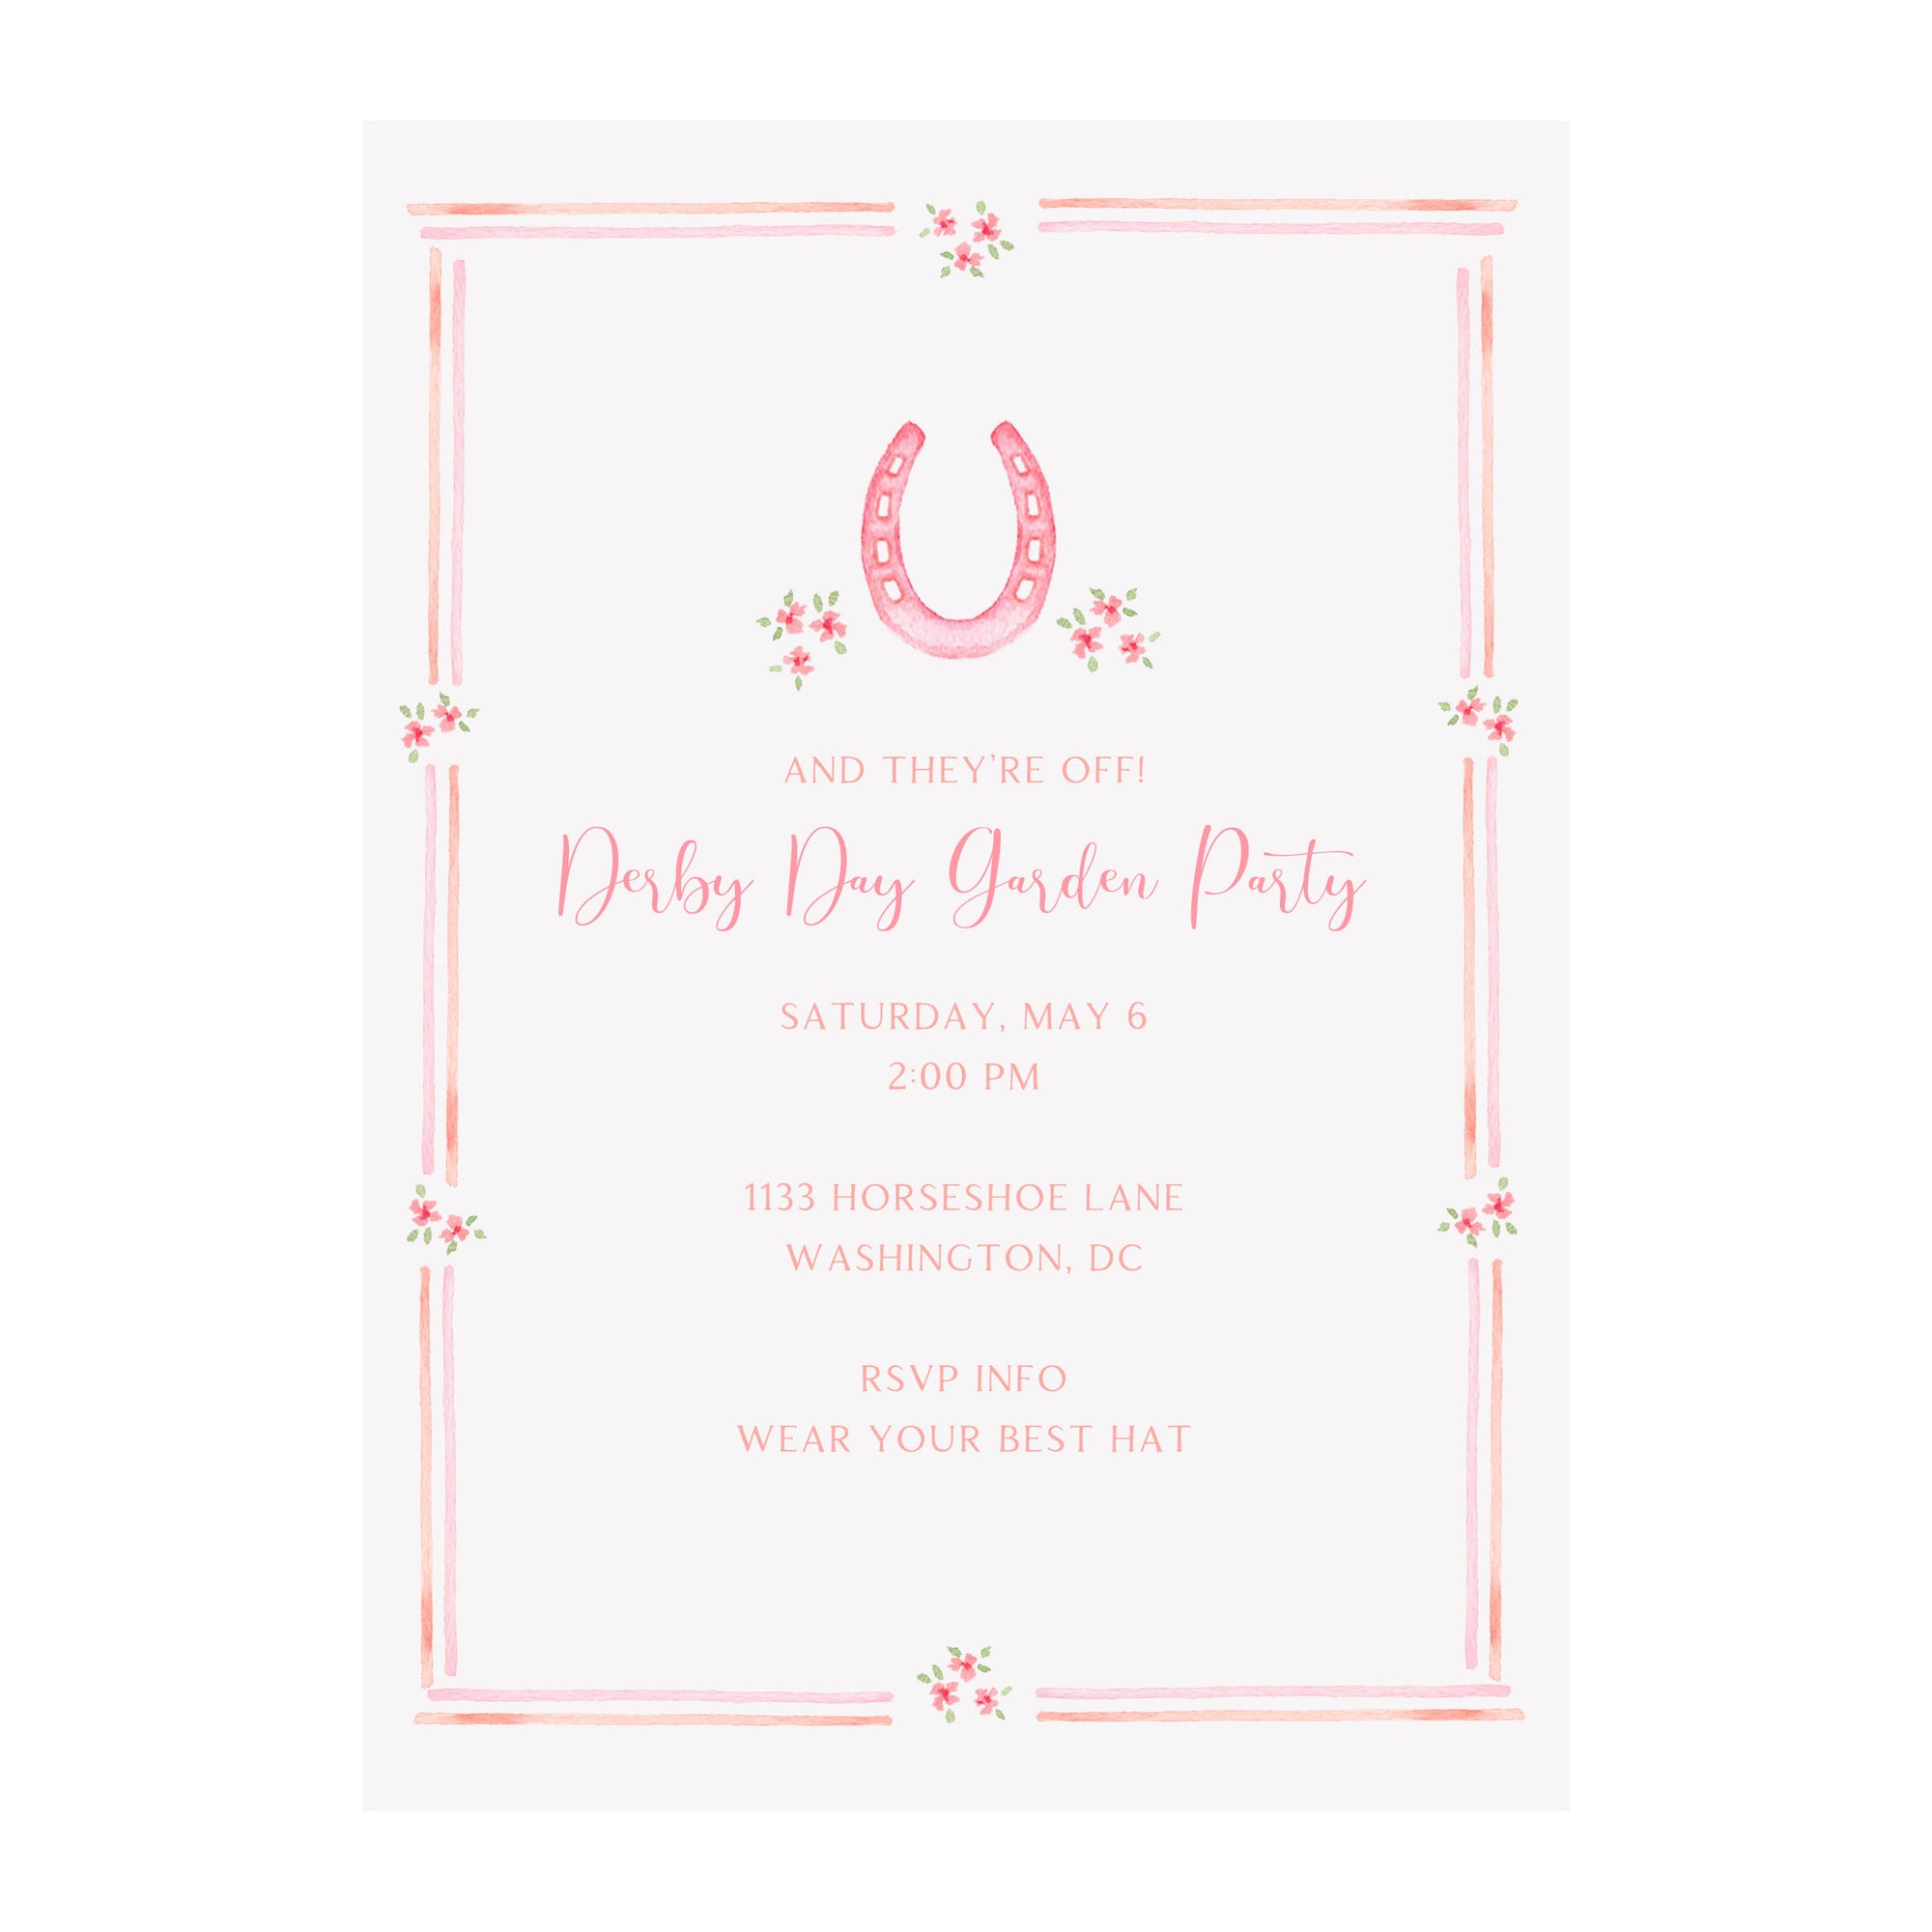 Derby Horseshoe Party Invitation